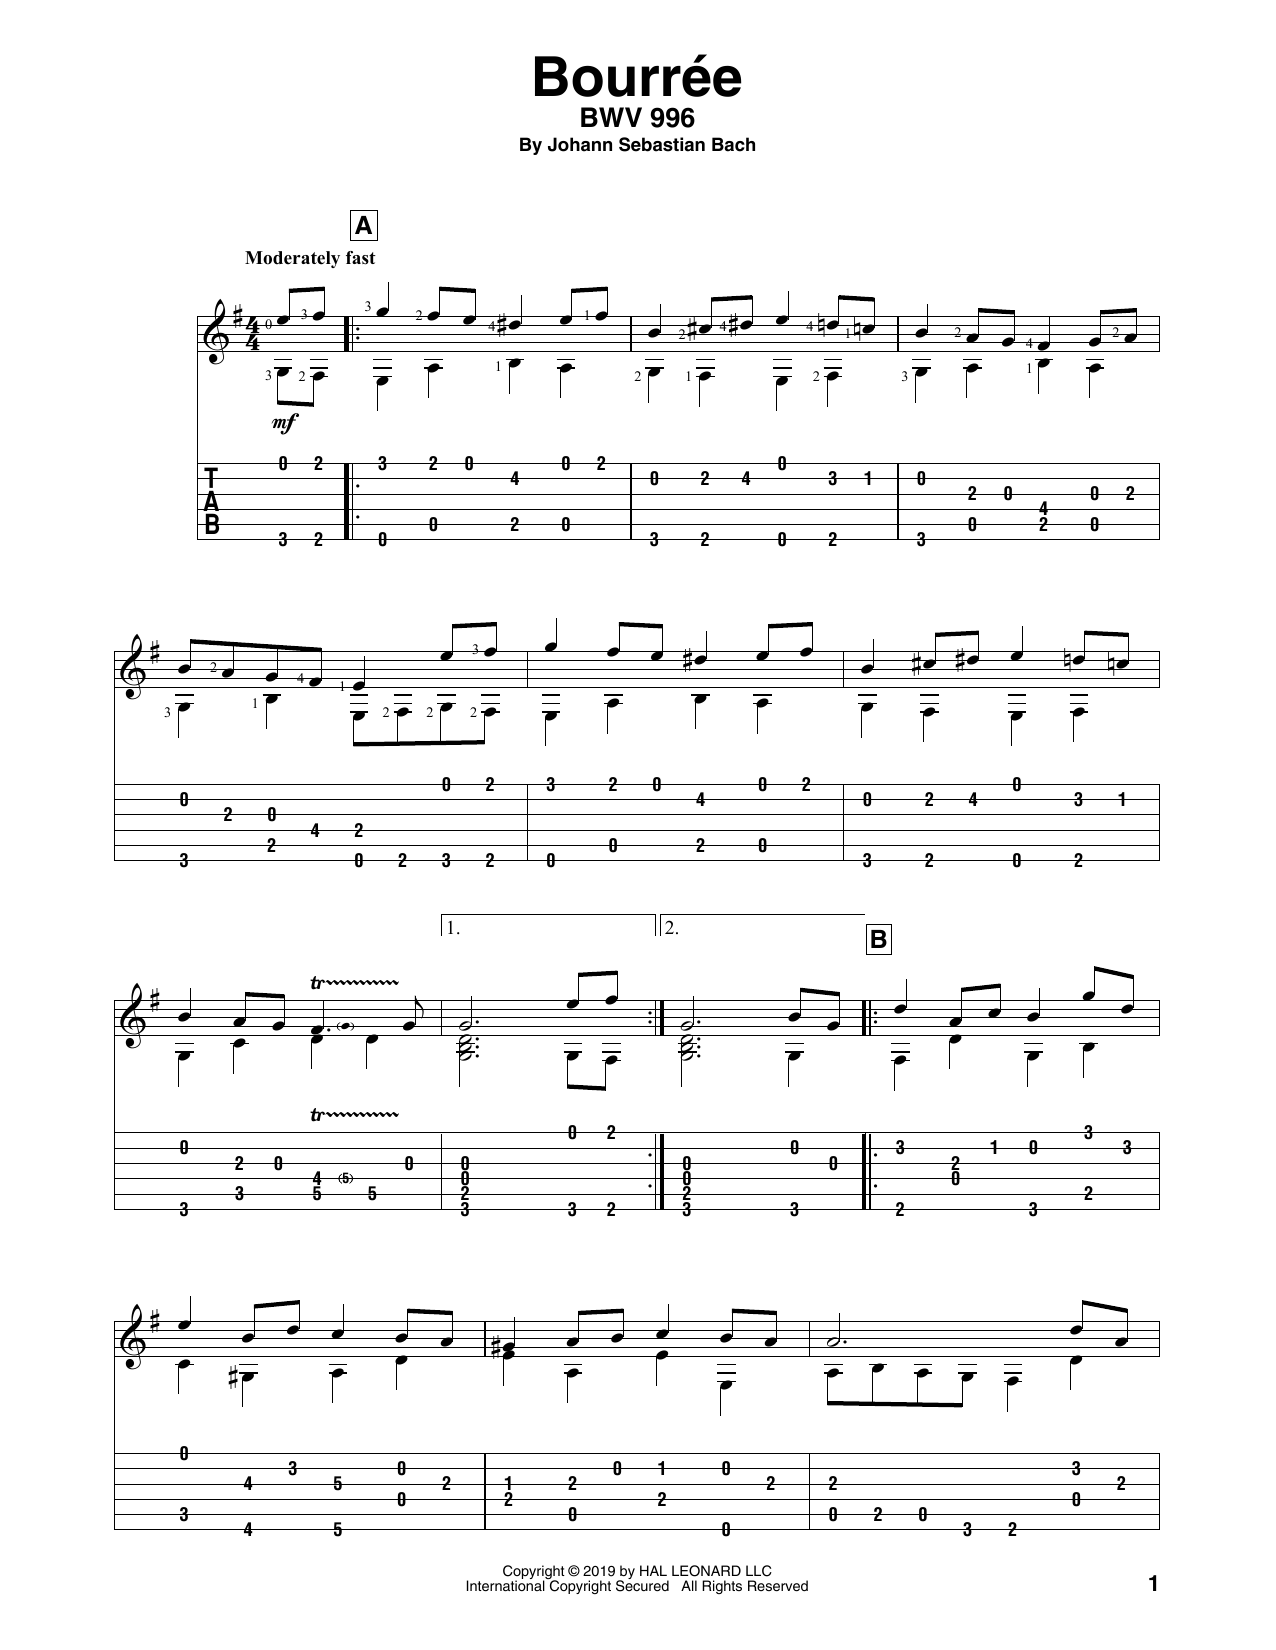 Johann Sebastian Bach Bouree (arr. Bill LaFleur) Sheet Music Notes & Chords for Solo Guitar Tab - Download or Print PDF